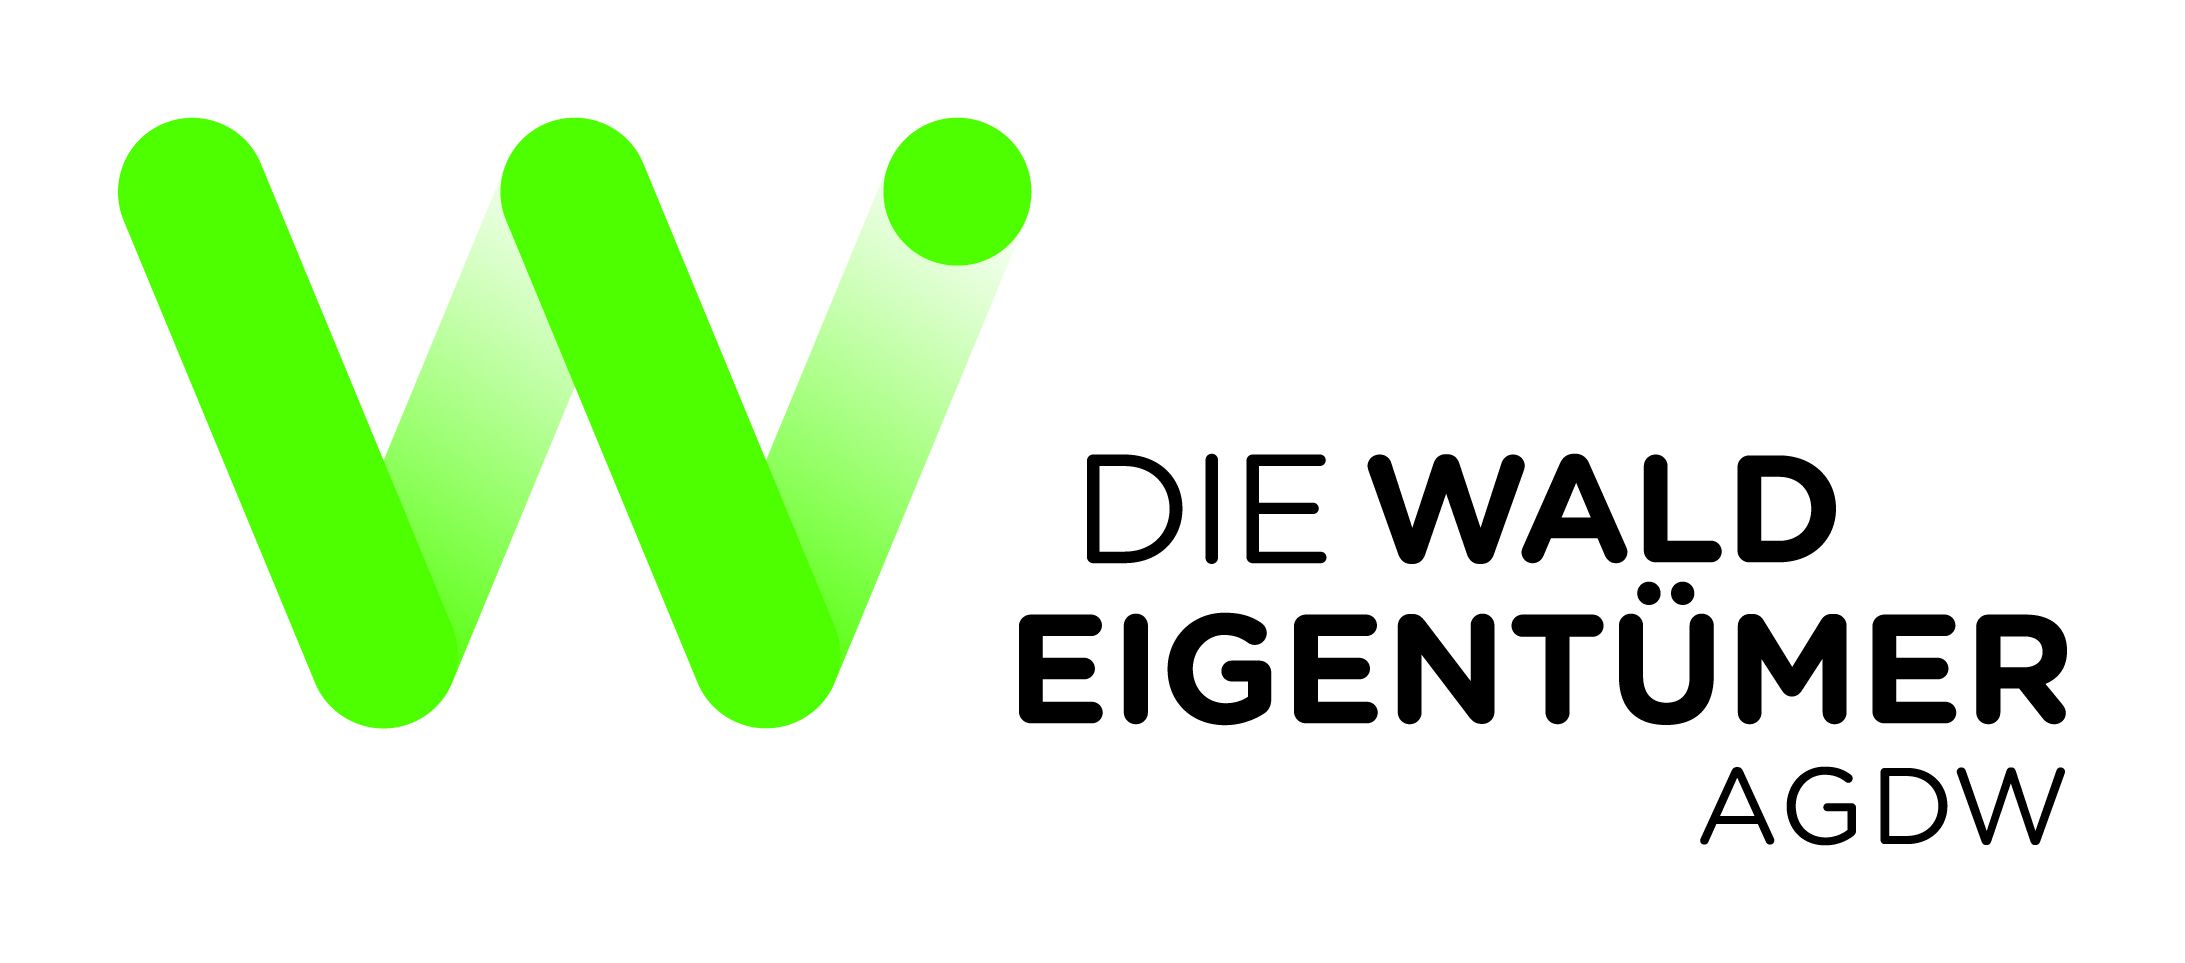 AGDW_-_Die_Waldeigentümer_Logo.jpg